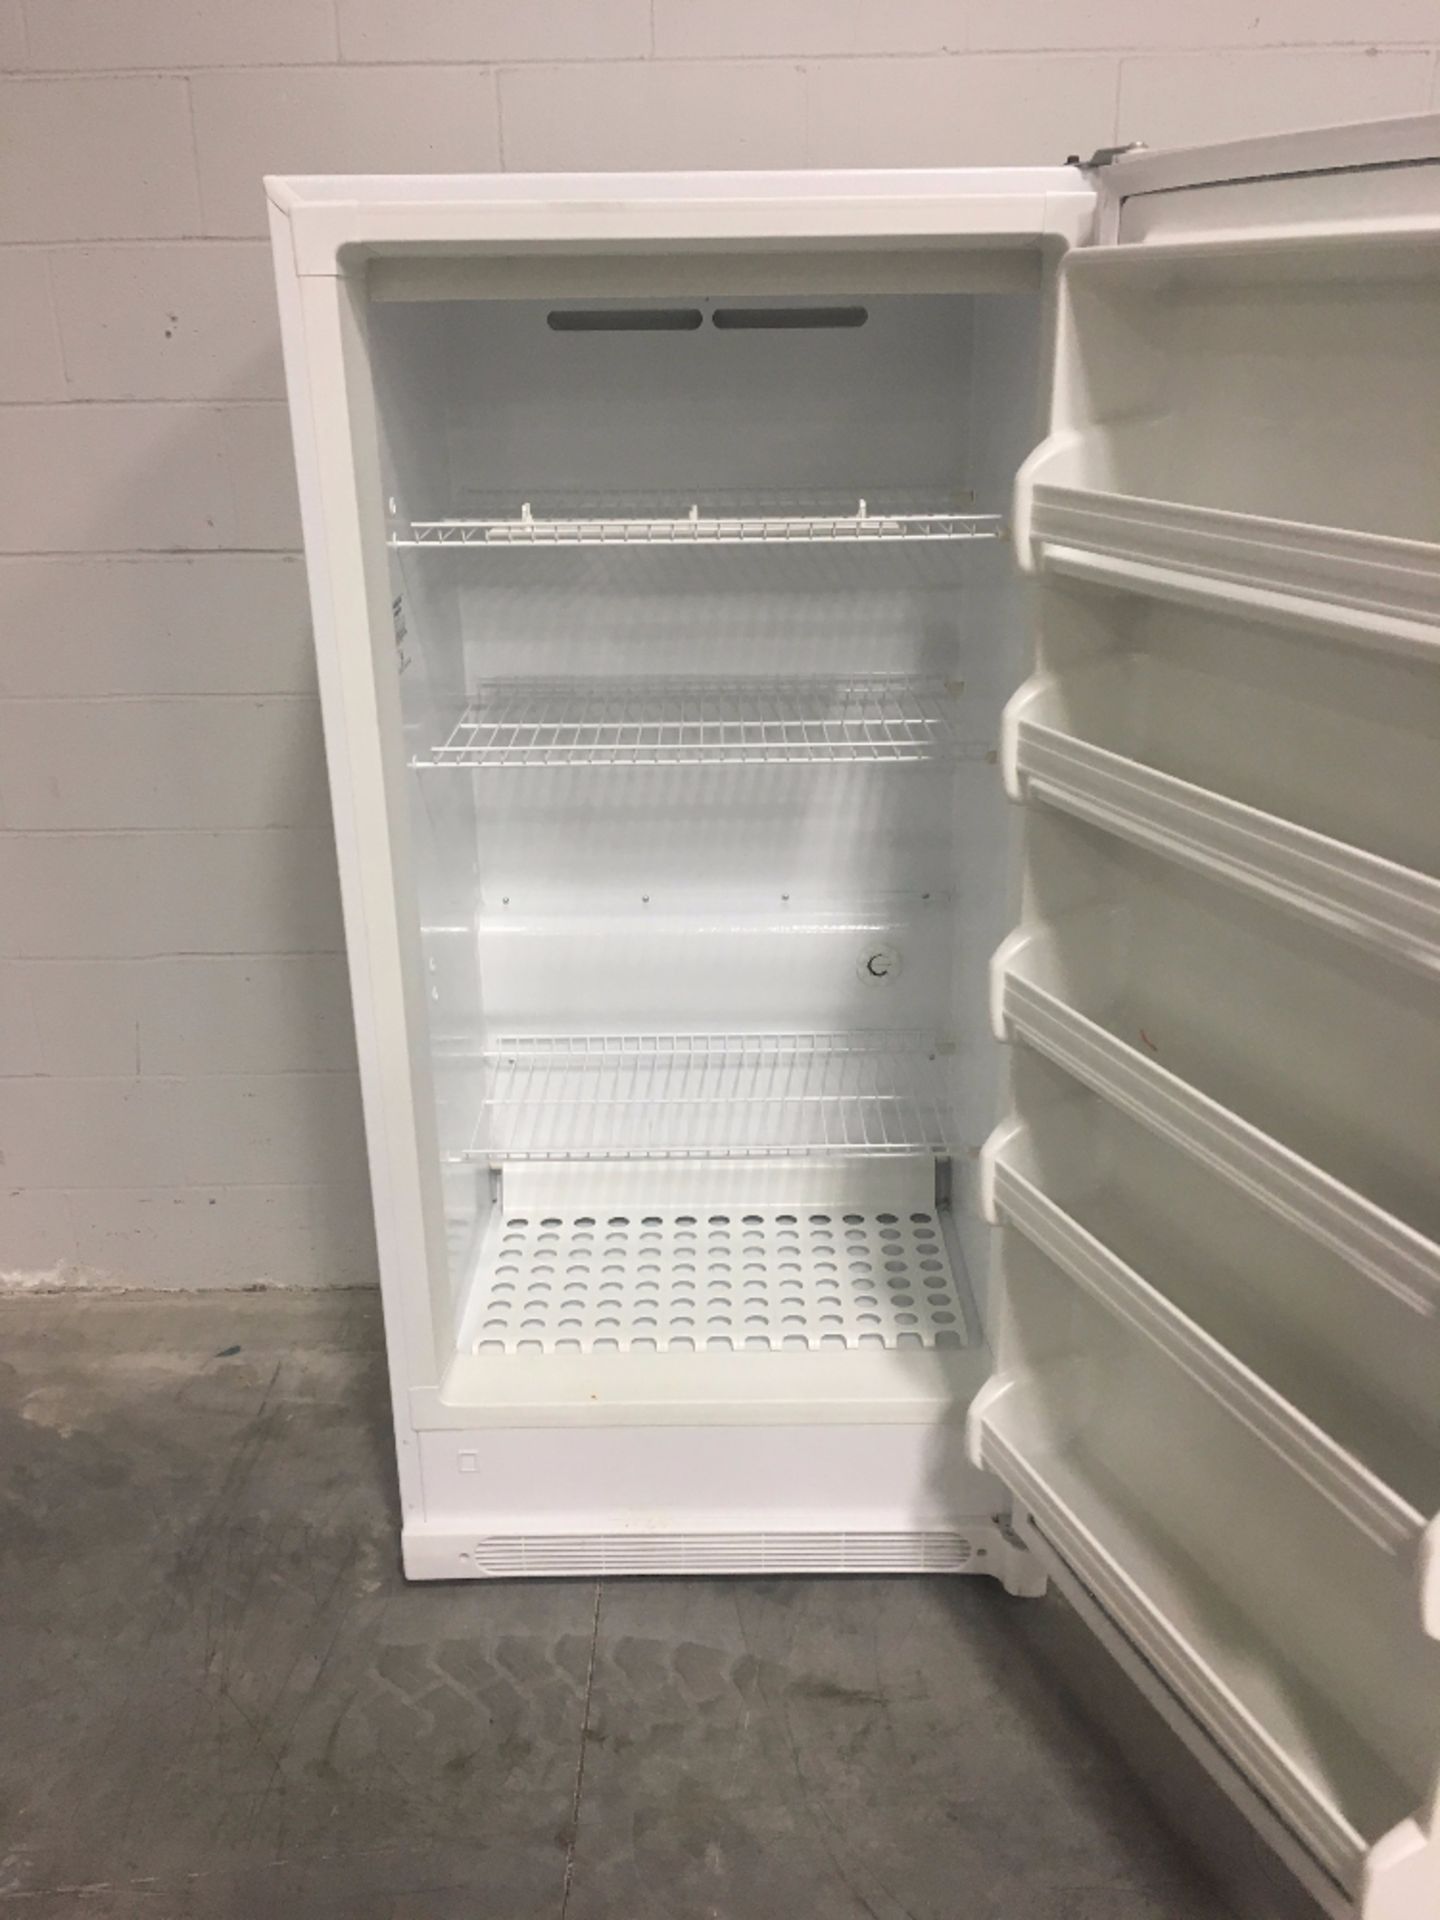 Kenmore Household Refrigerator - Image 2 of 2